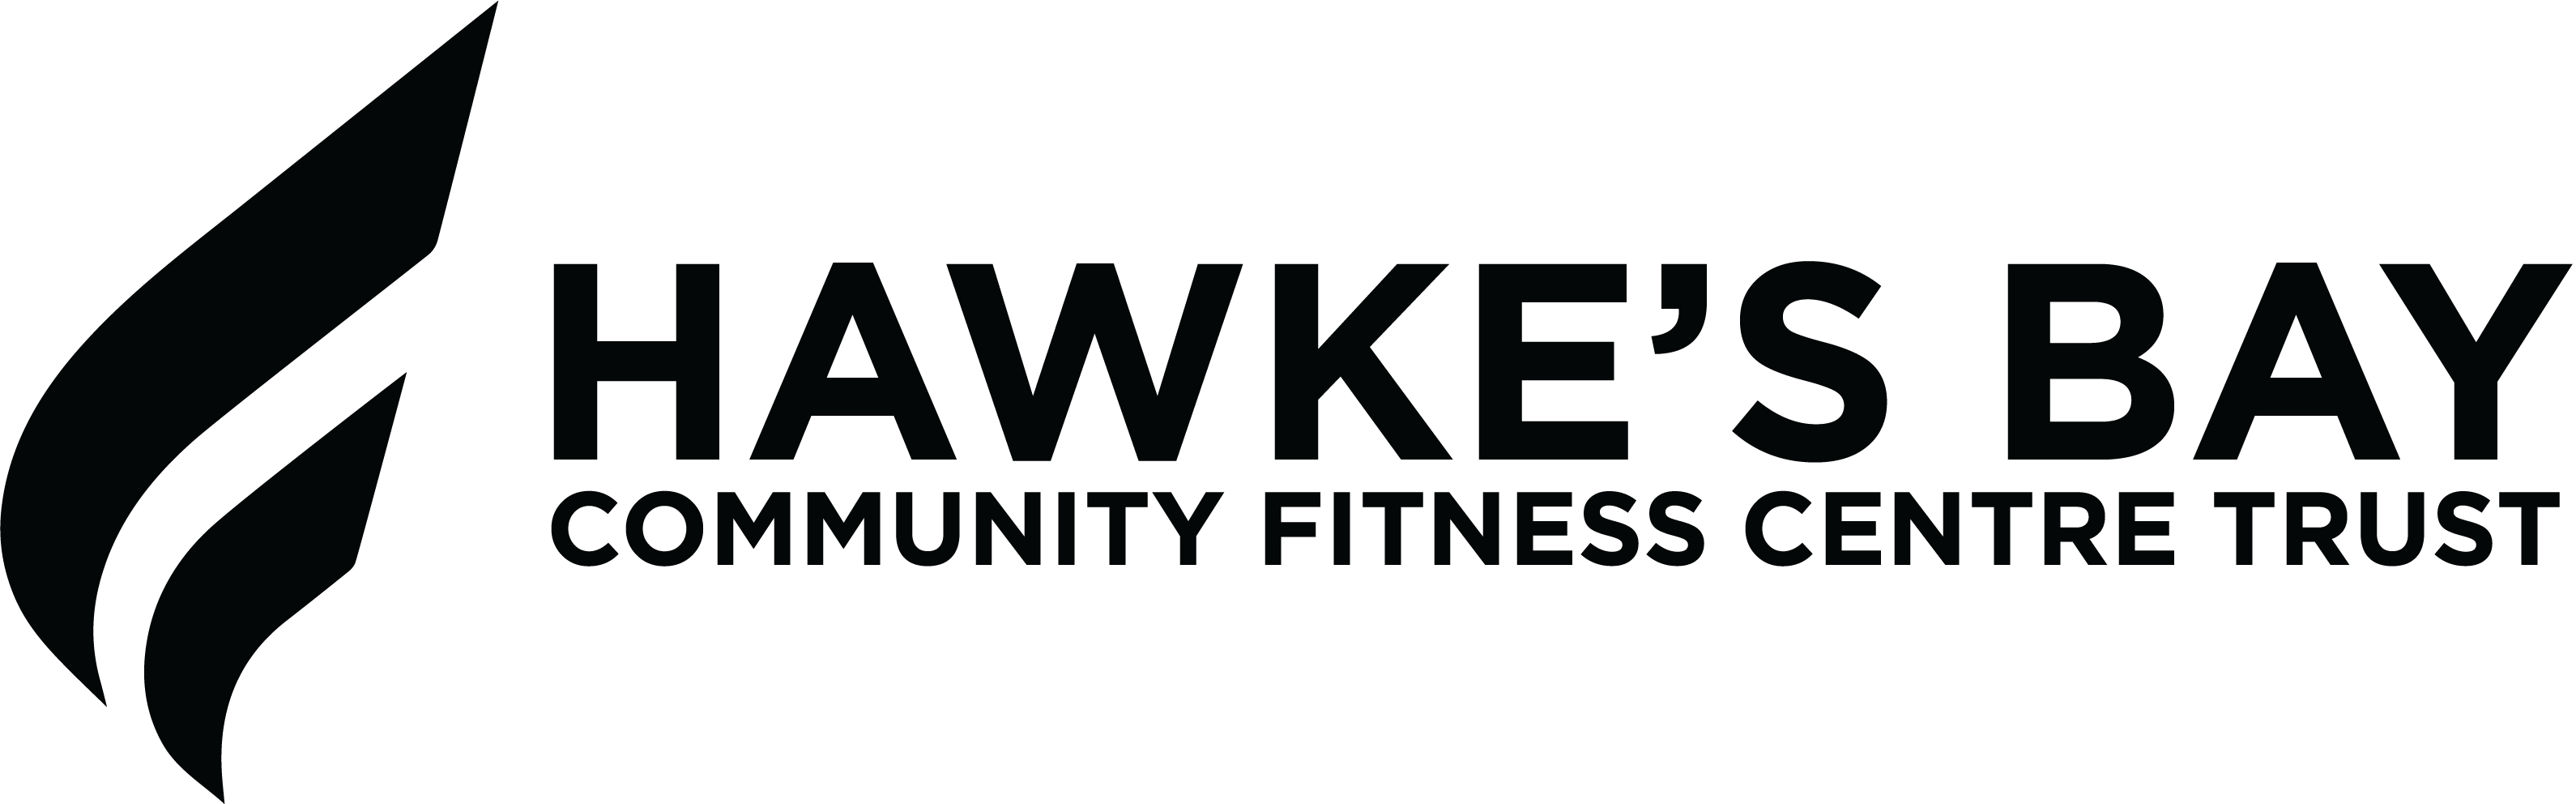 Hawke's Bay Community Fitness Centre Trust